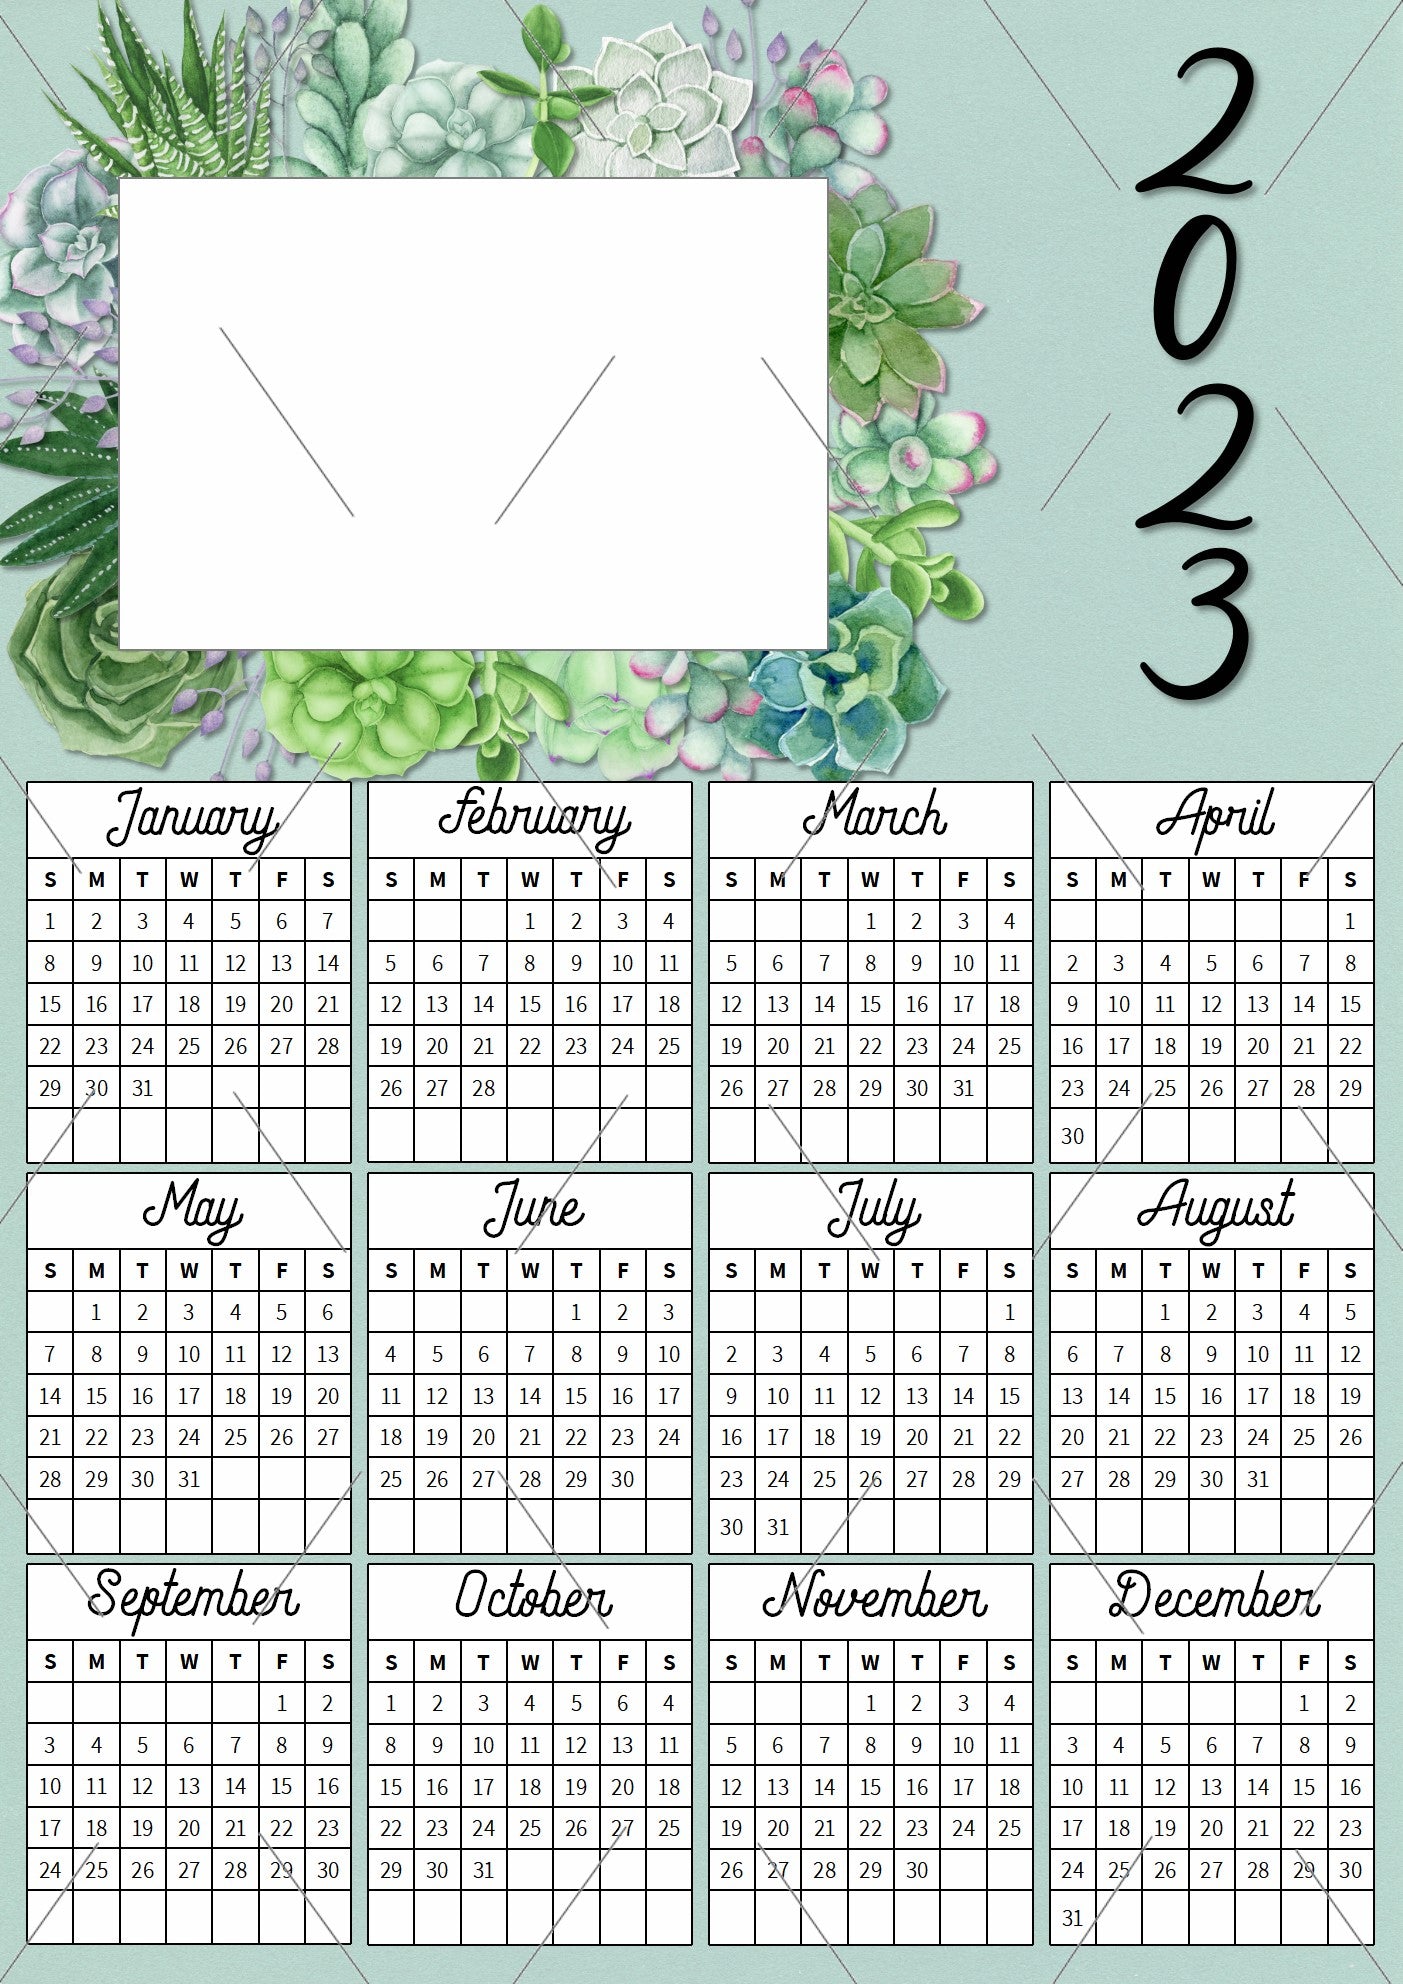 READY TO PRINT:  2023 Calendar - Succulents